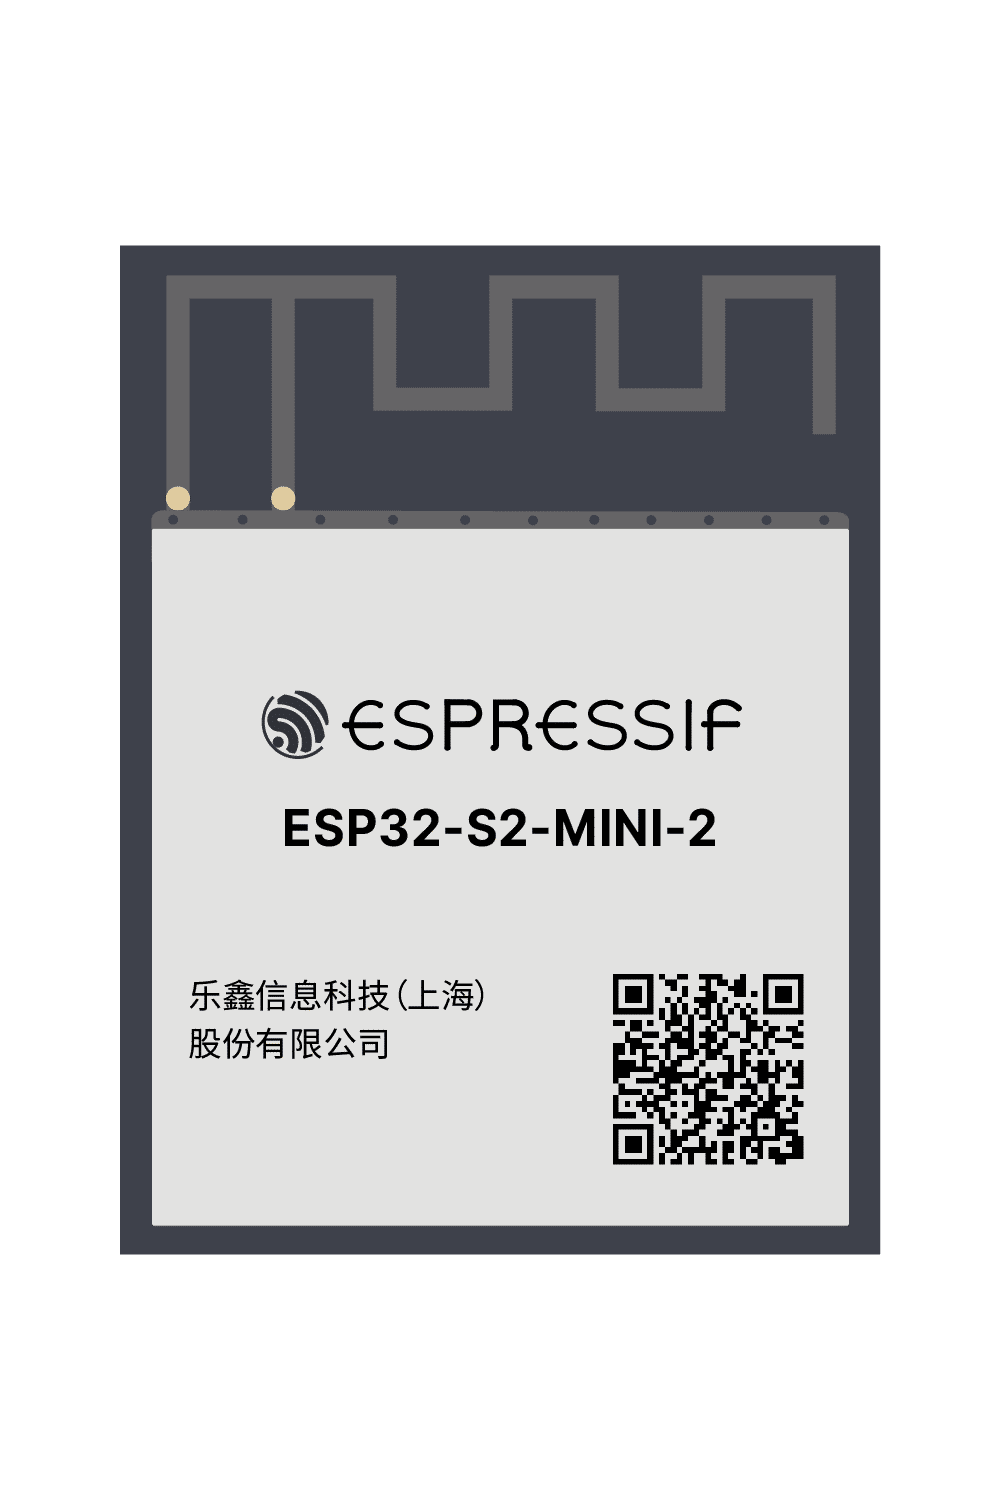 Espressif ESP32-S2-MINI-2-N4 - moduł WiFi